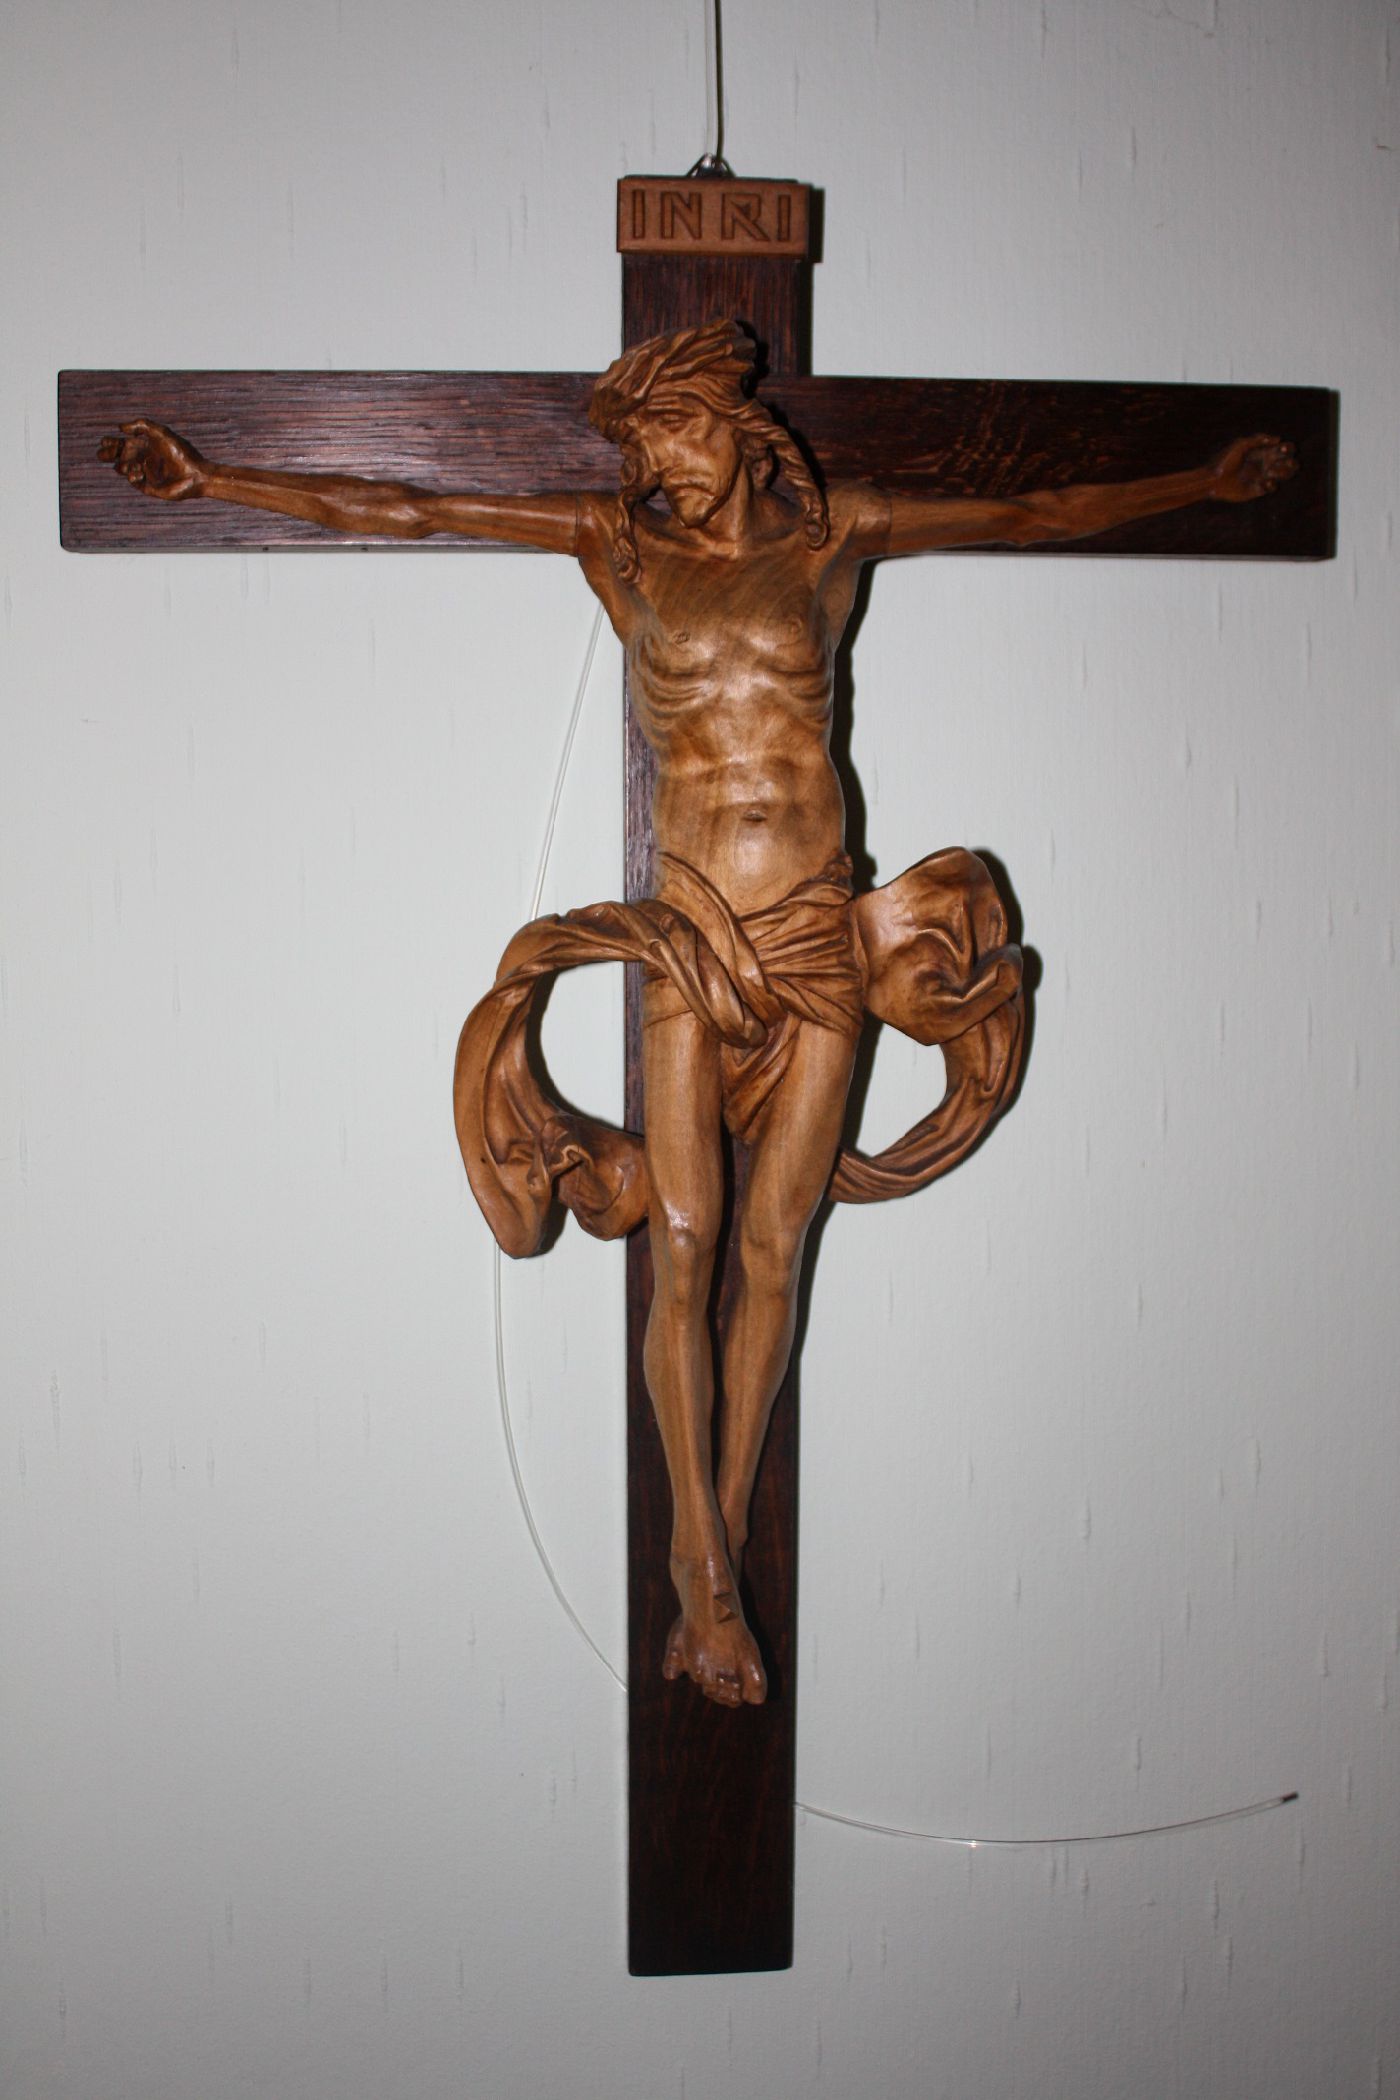 Holzkreuz, Wandkreuz mit Jesus, um 1900 geschnitzt